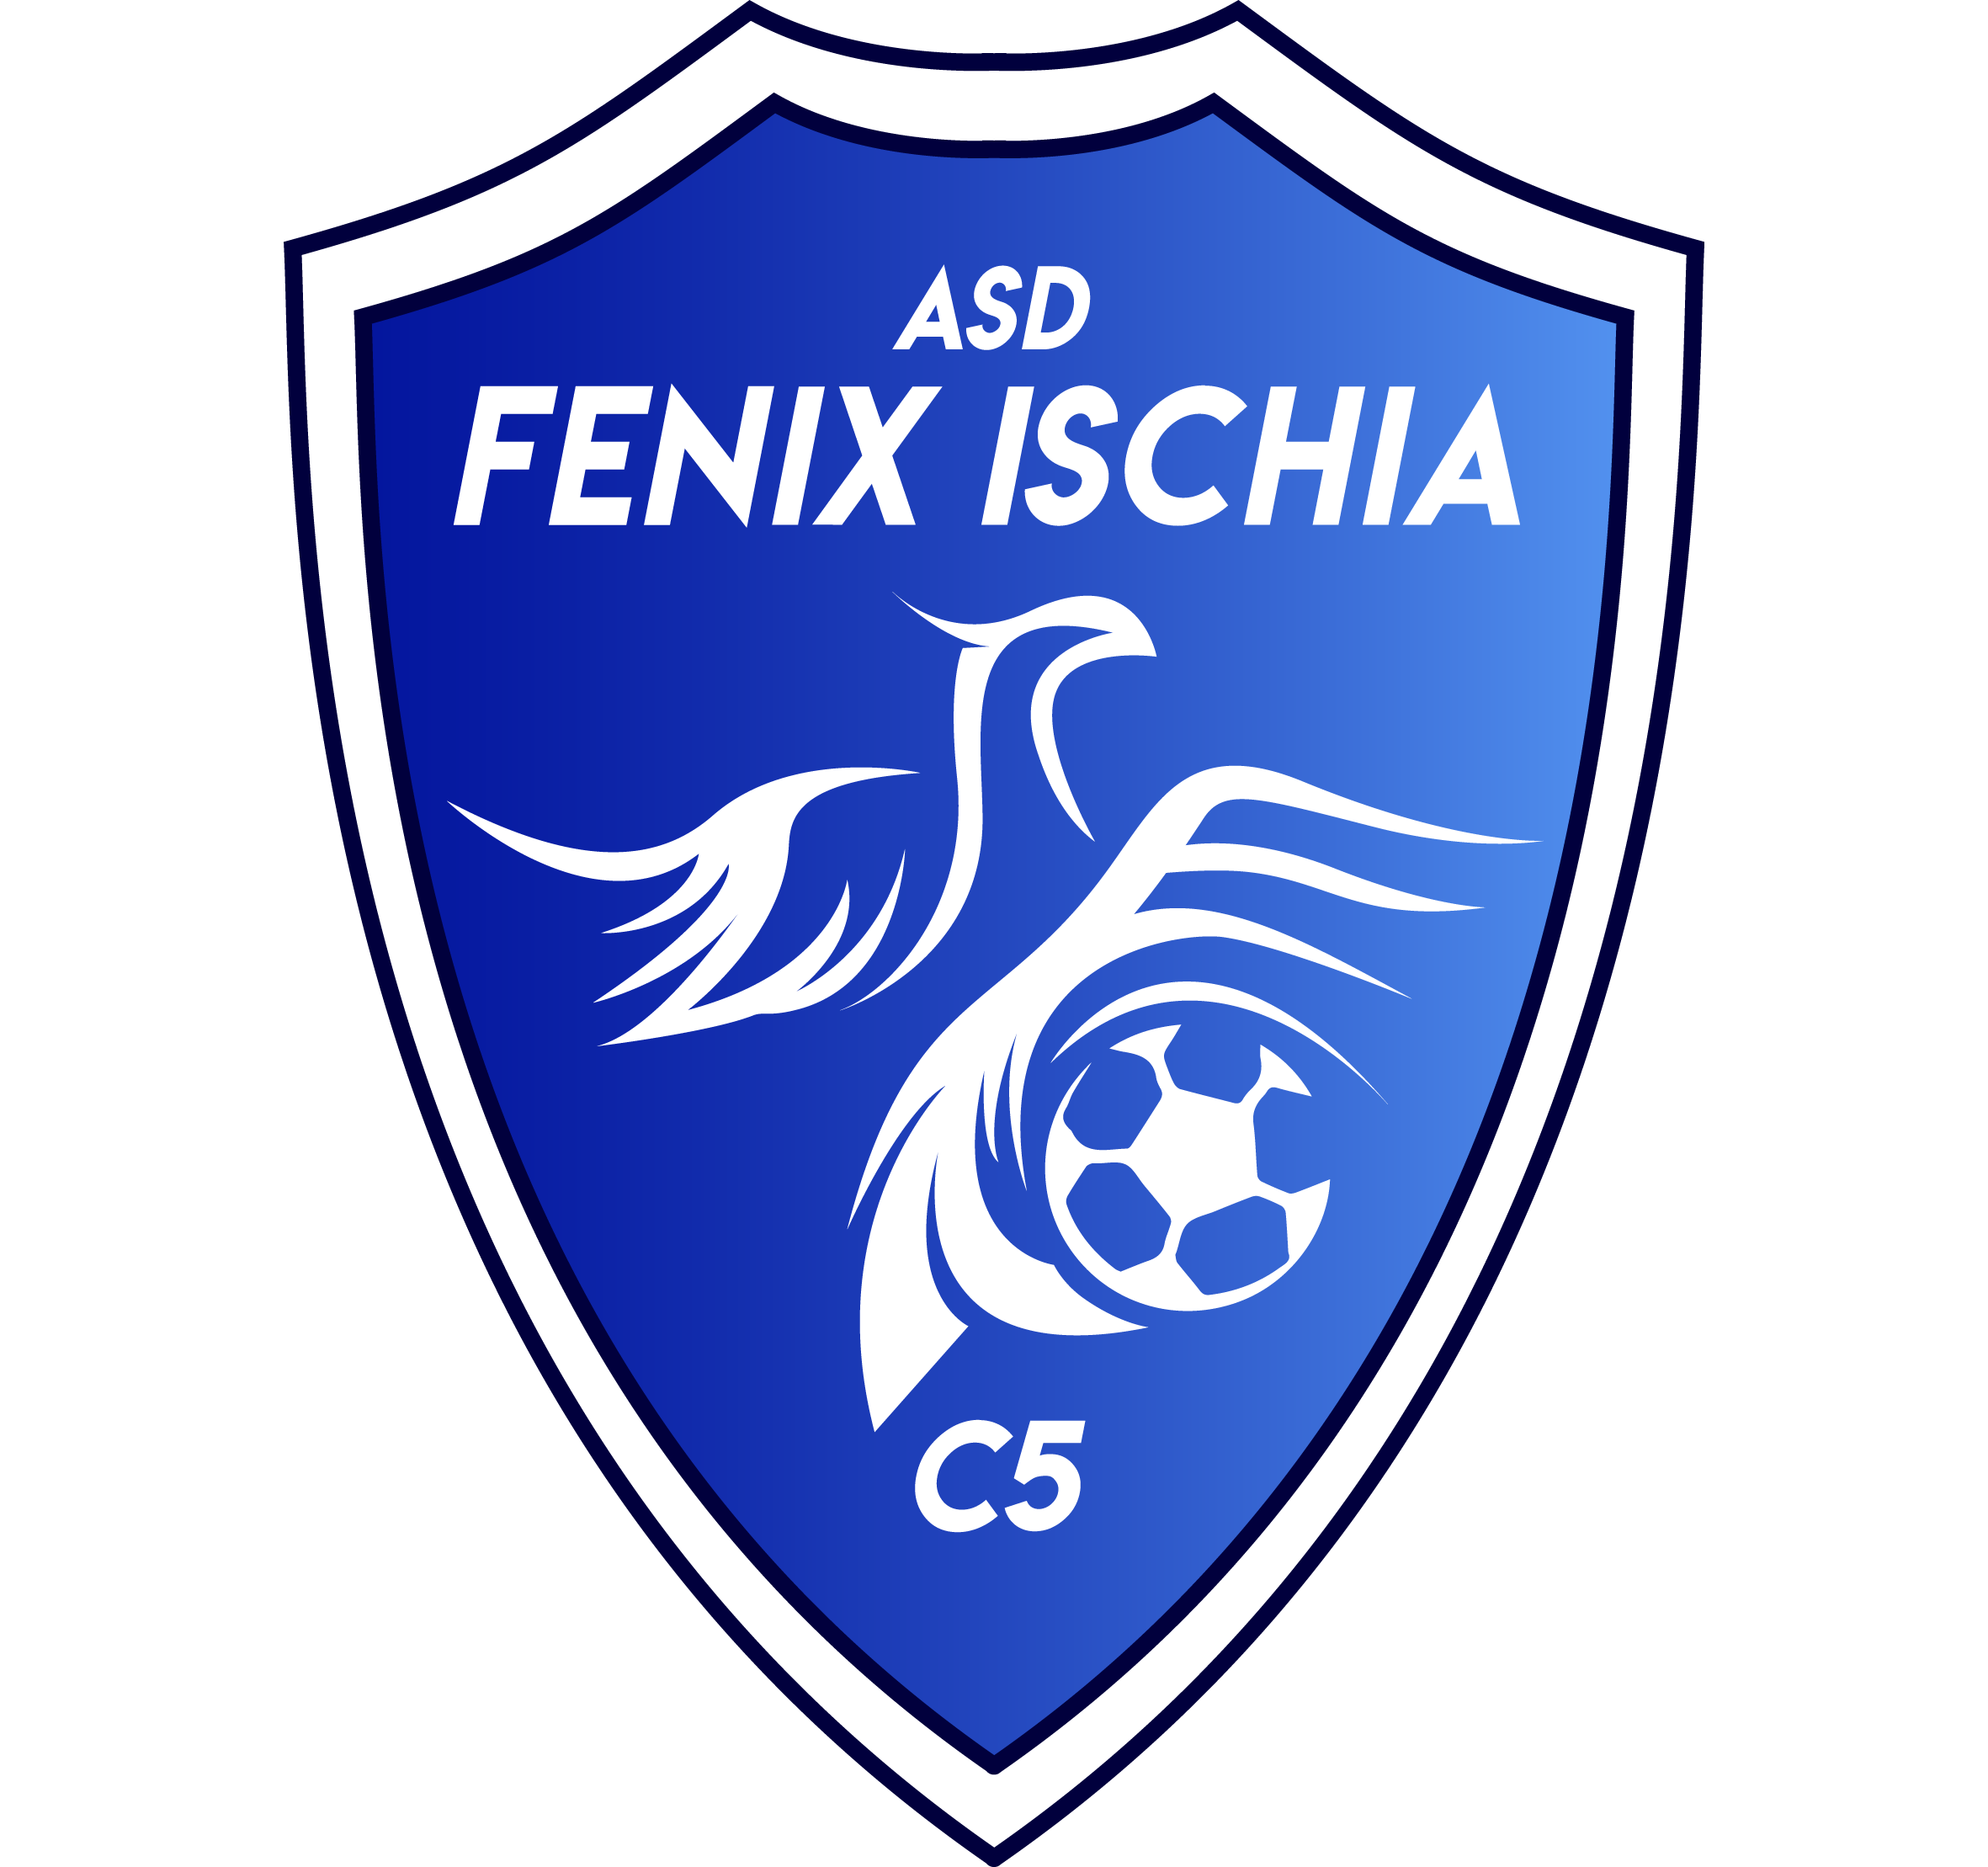 Fenix Ischia C5